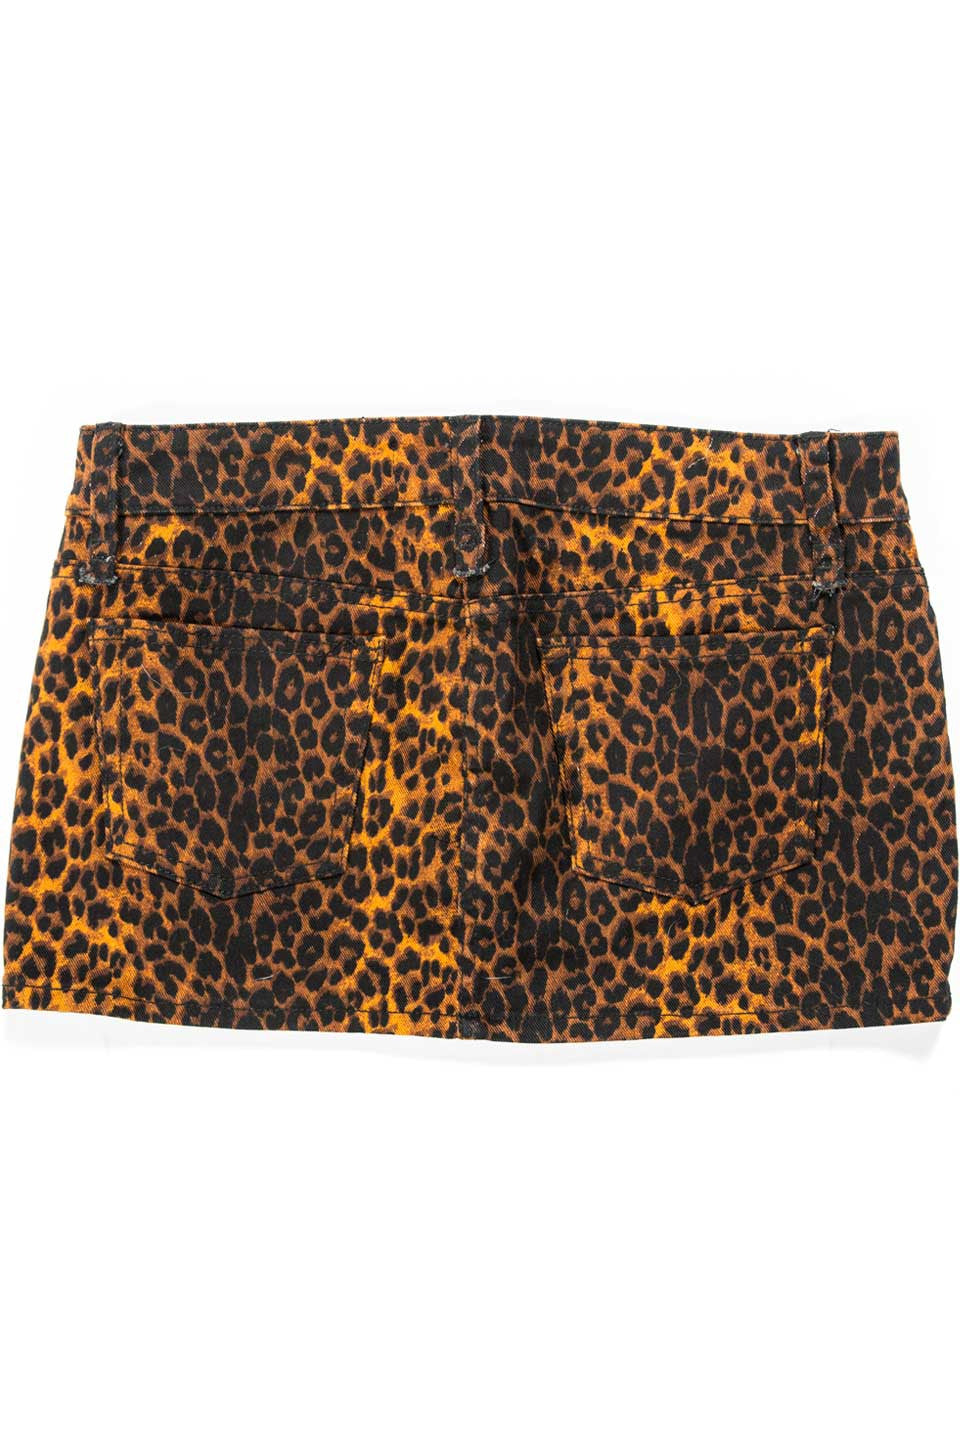 Vintage Leopard Short Jean Skirt-Skirts-Lip Service